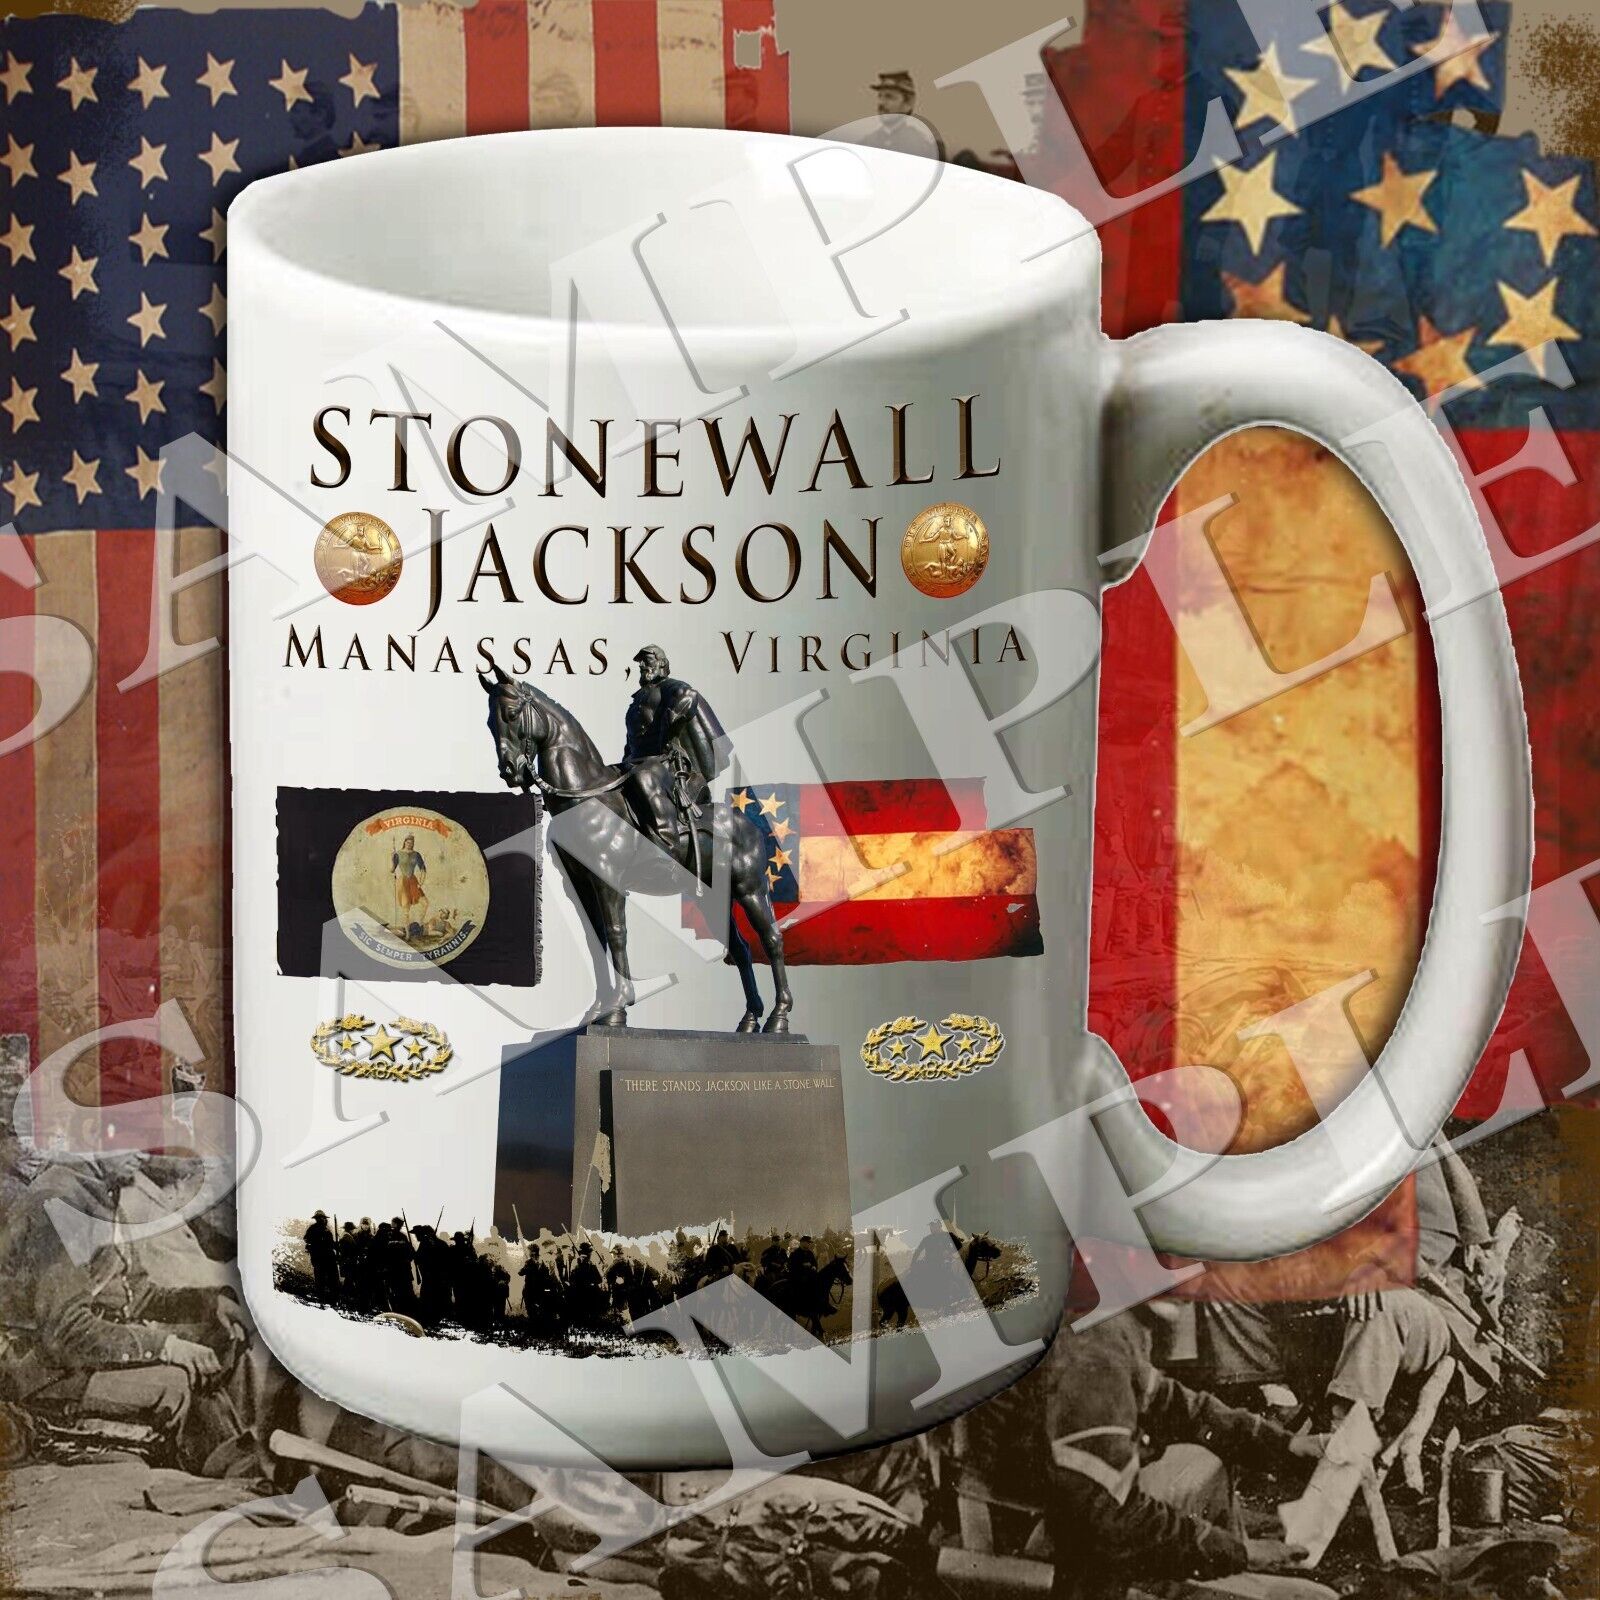 Stonewall Jackson Monument Manassas 15-ounce Civil War themed coffee mug